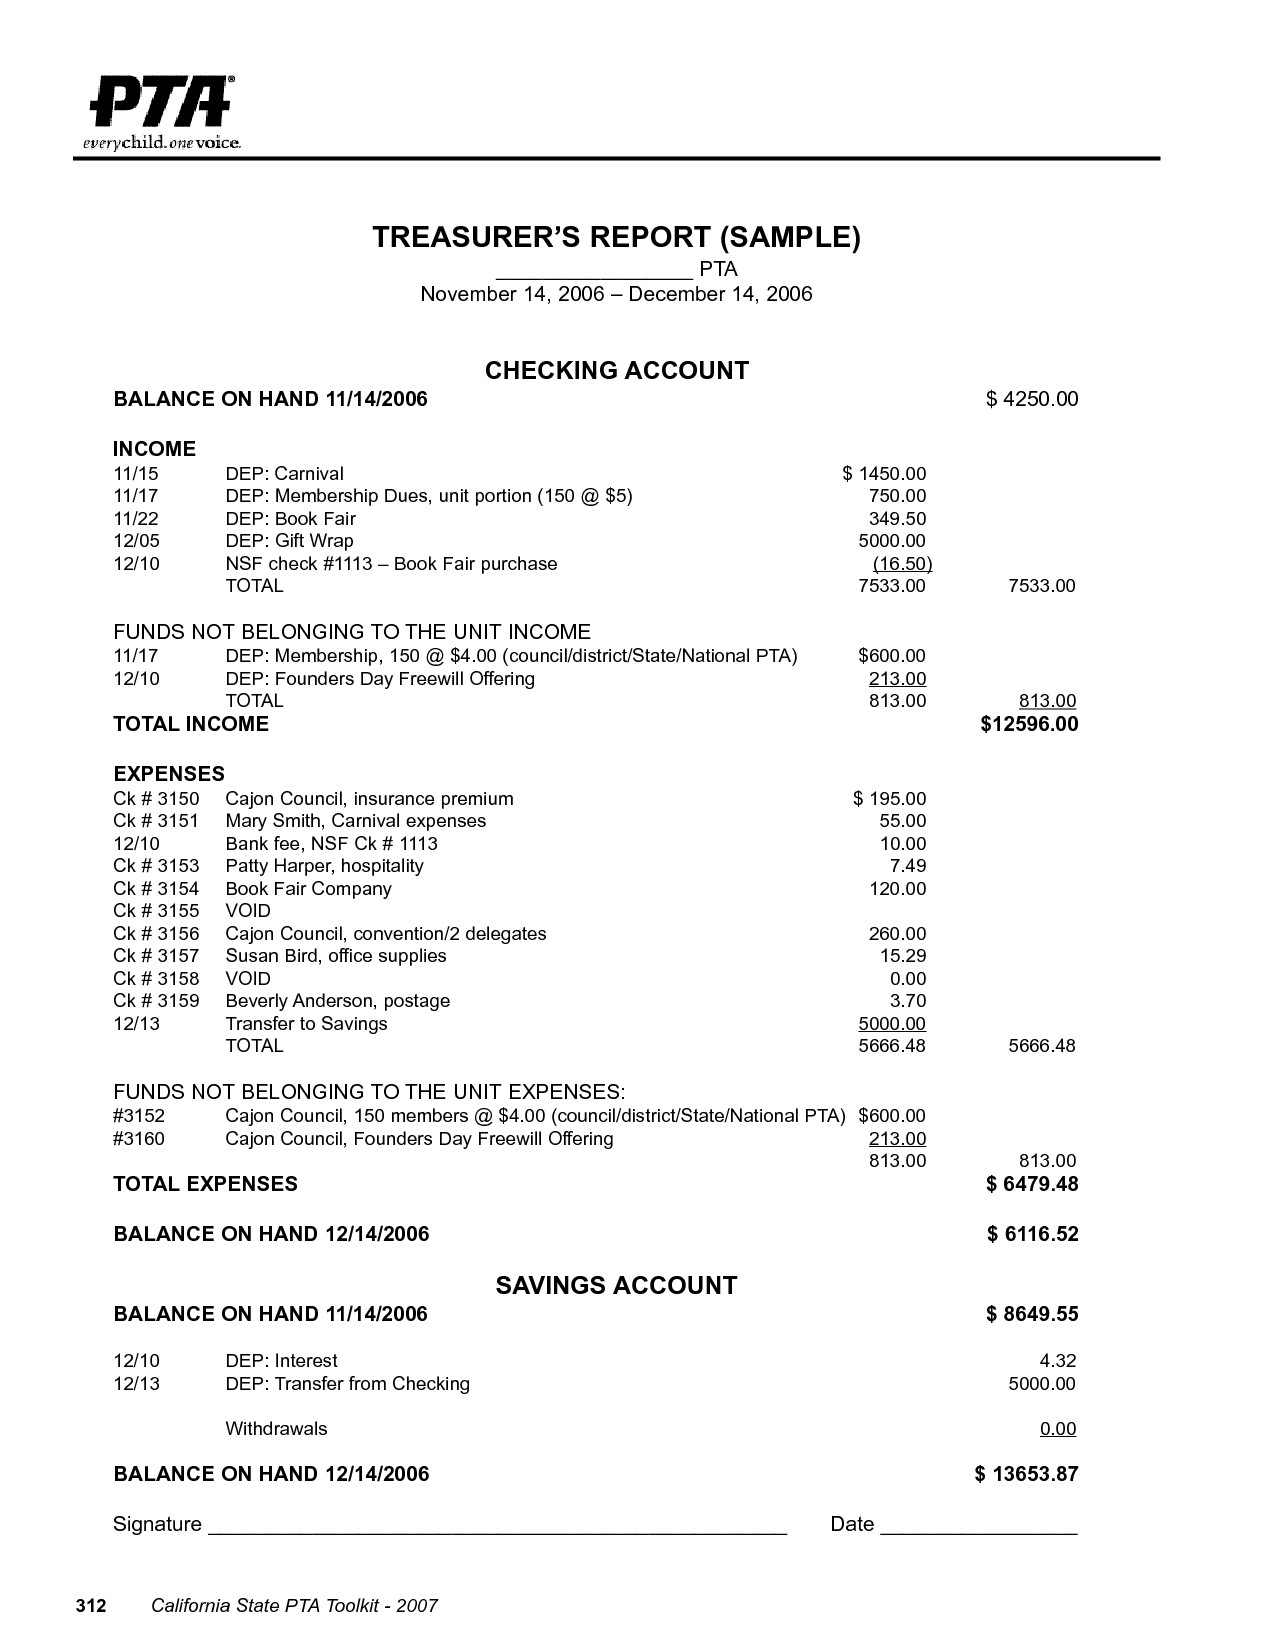 The Treasurer’s Report